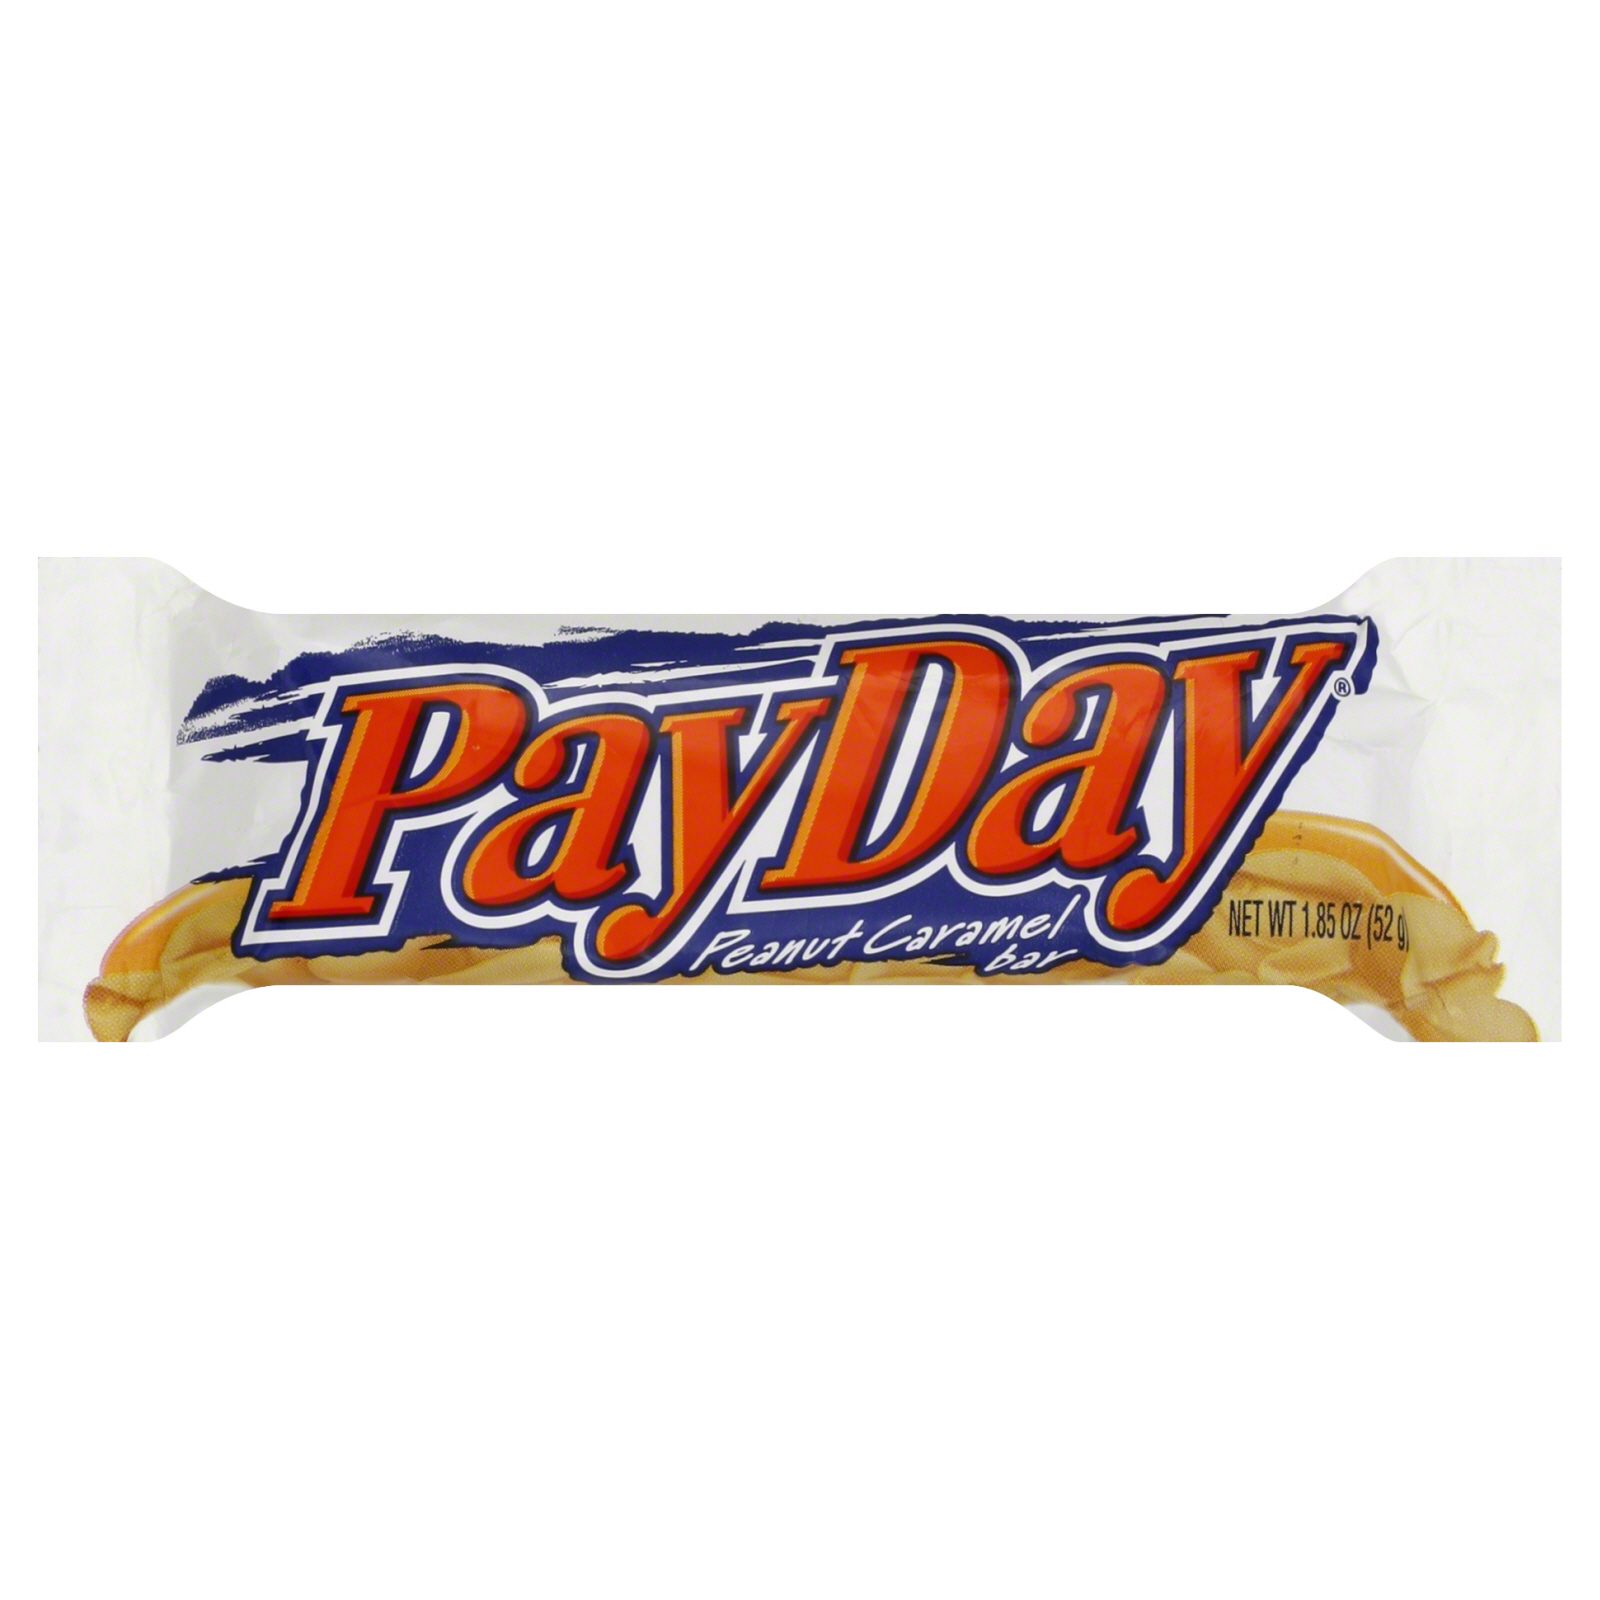 Payday Peanut Caramel Bar, 1.85 oz (52 g)